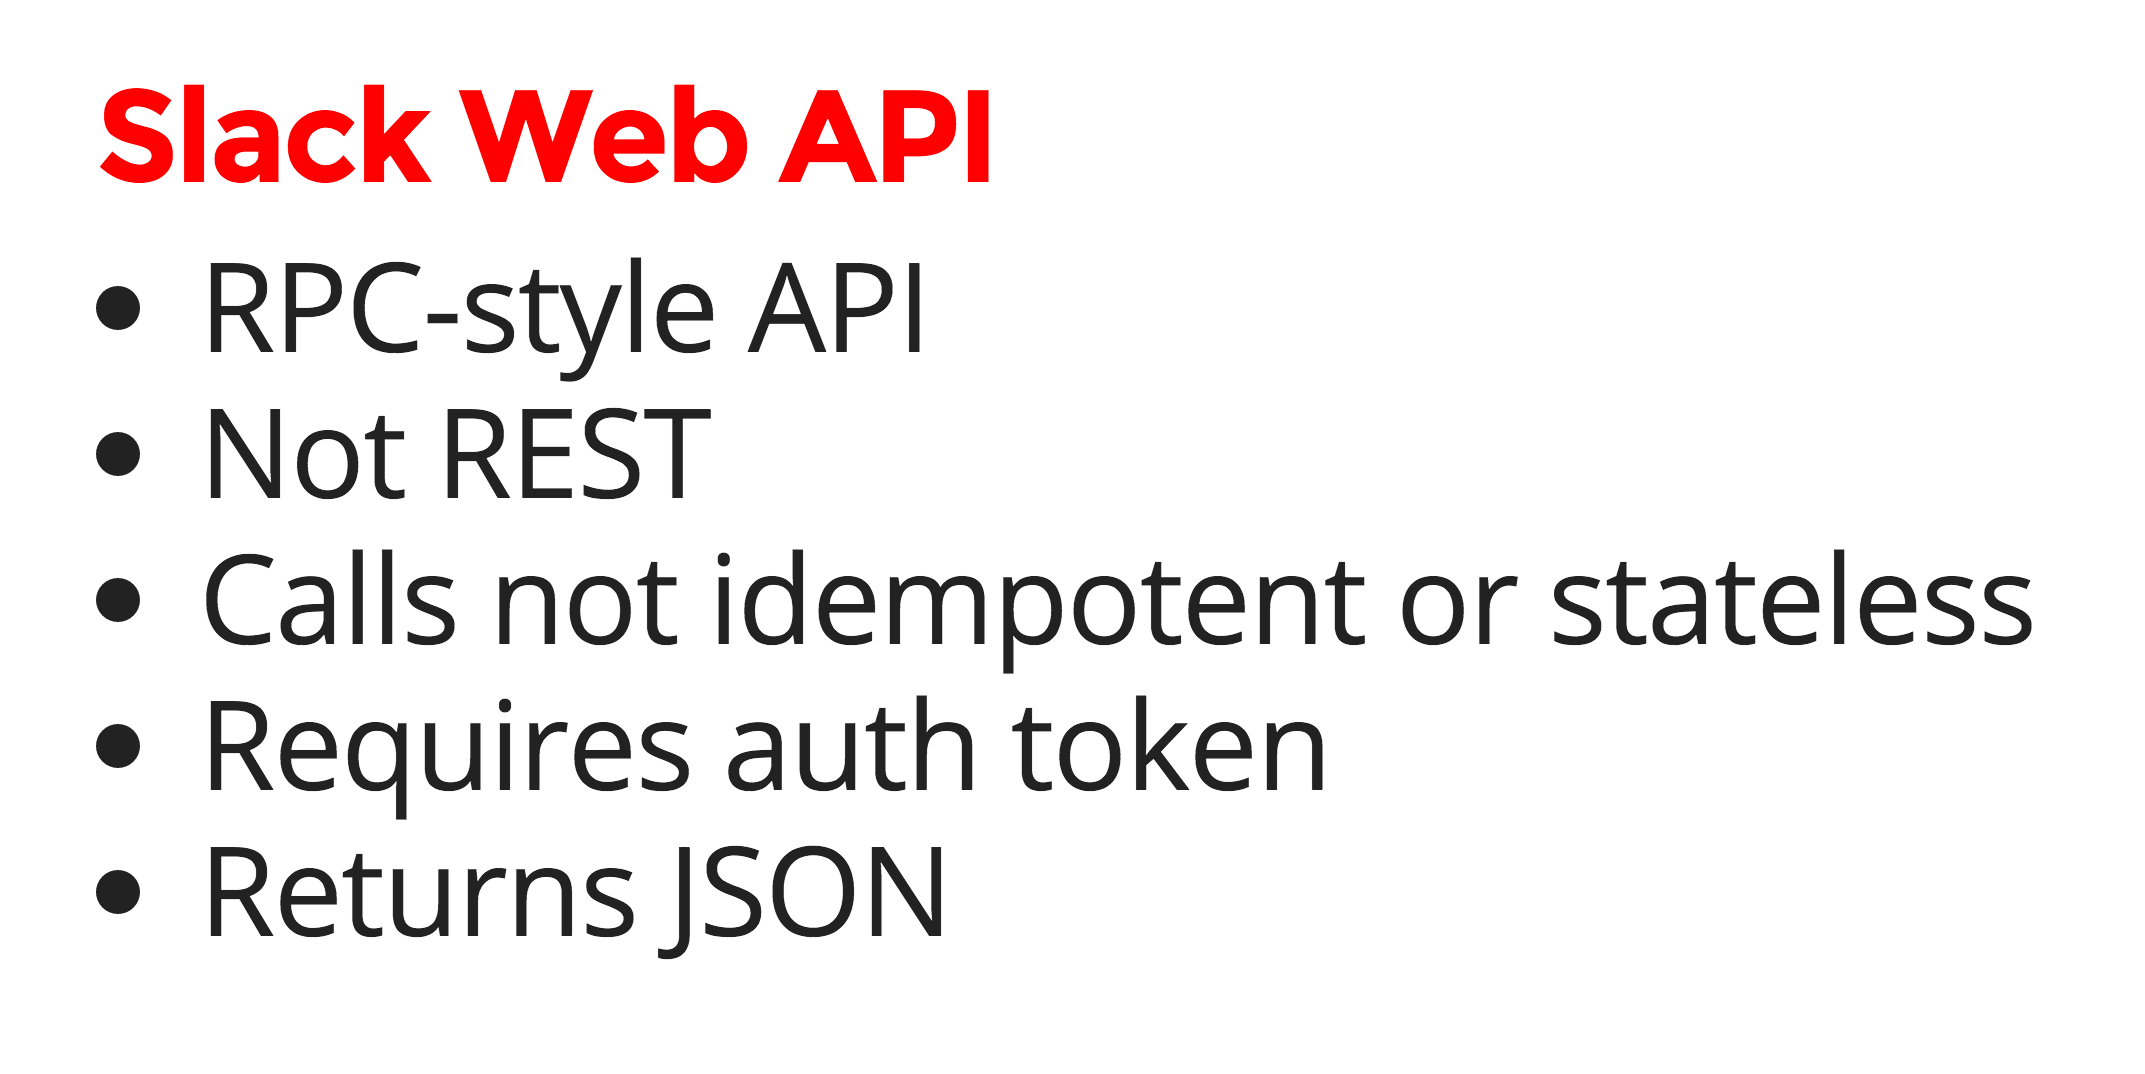 More information about the Slack web API.